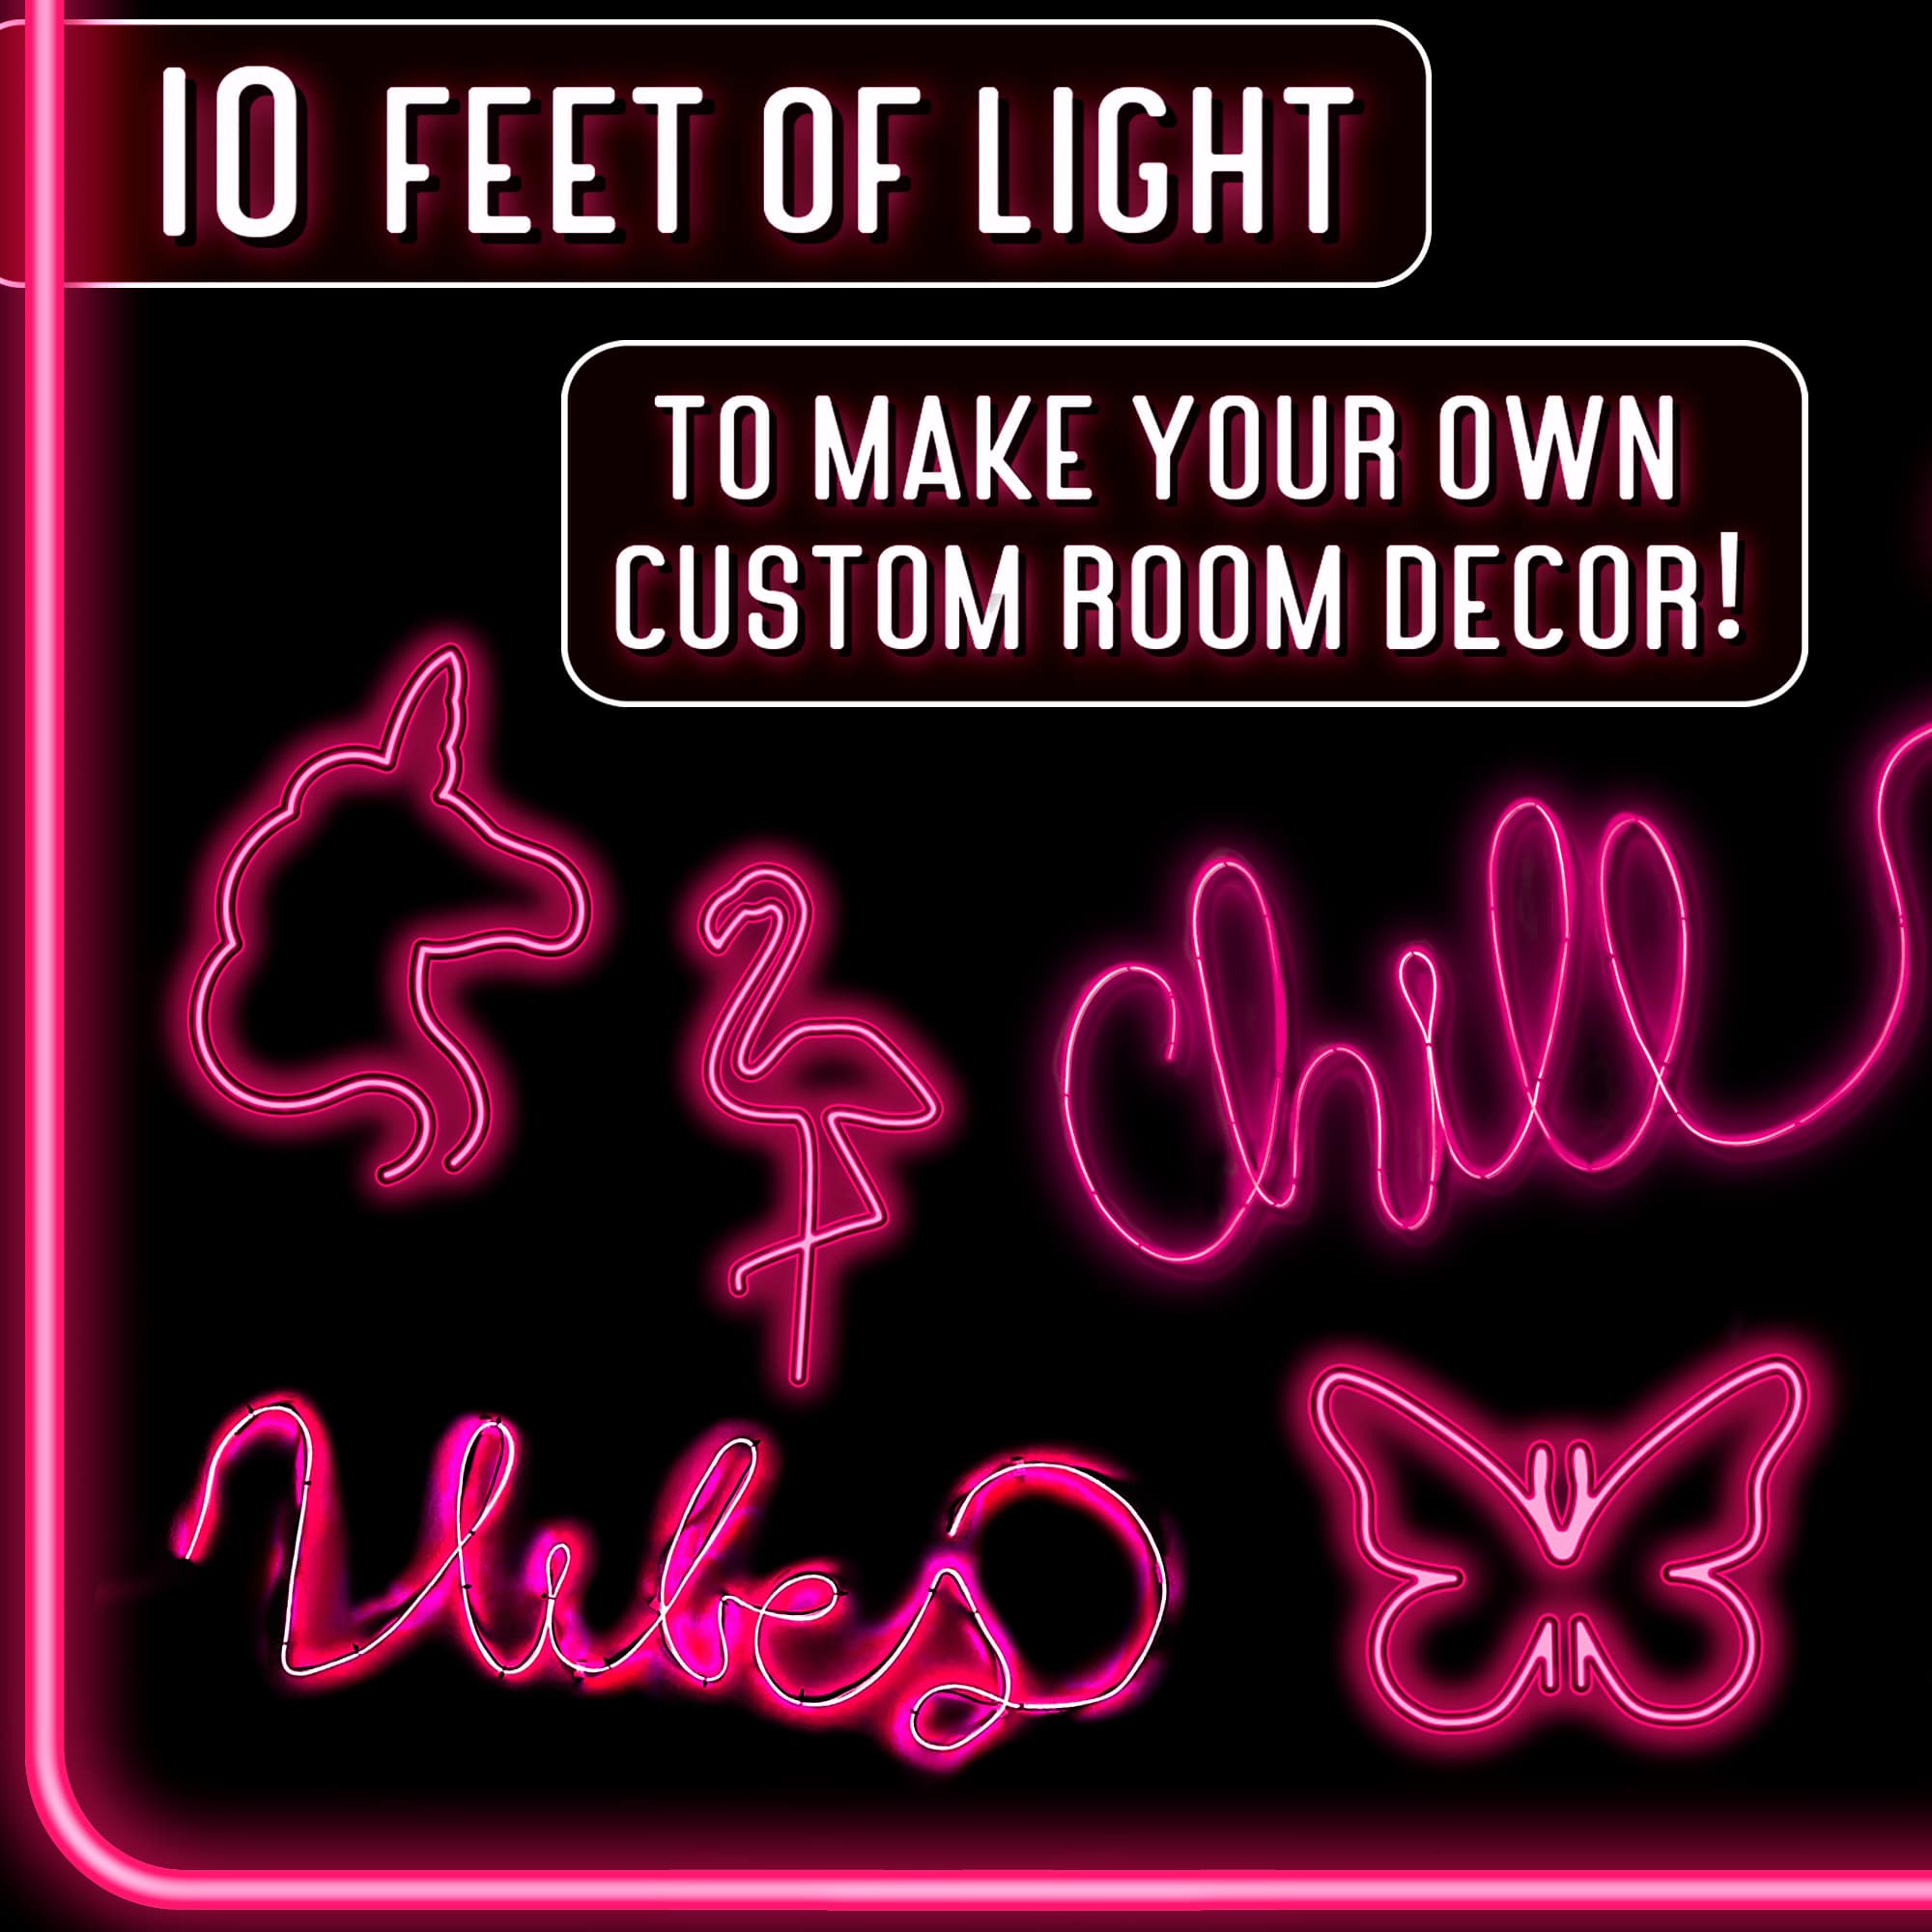 ArtSkills&#xAE; Make Your Own DIY Neon Sign Kit